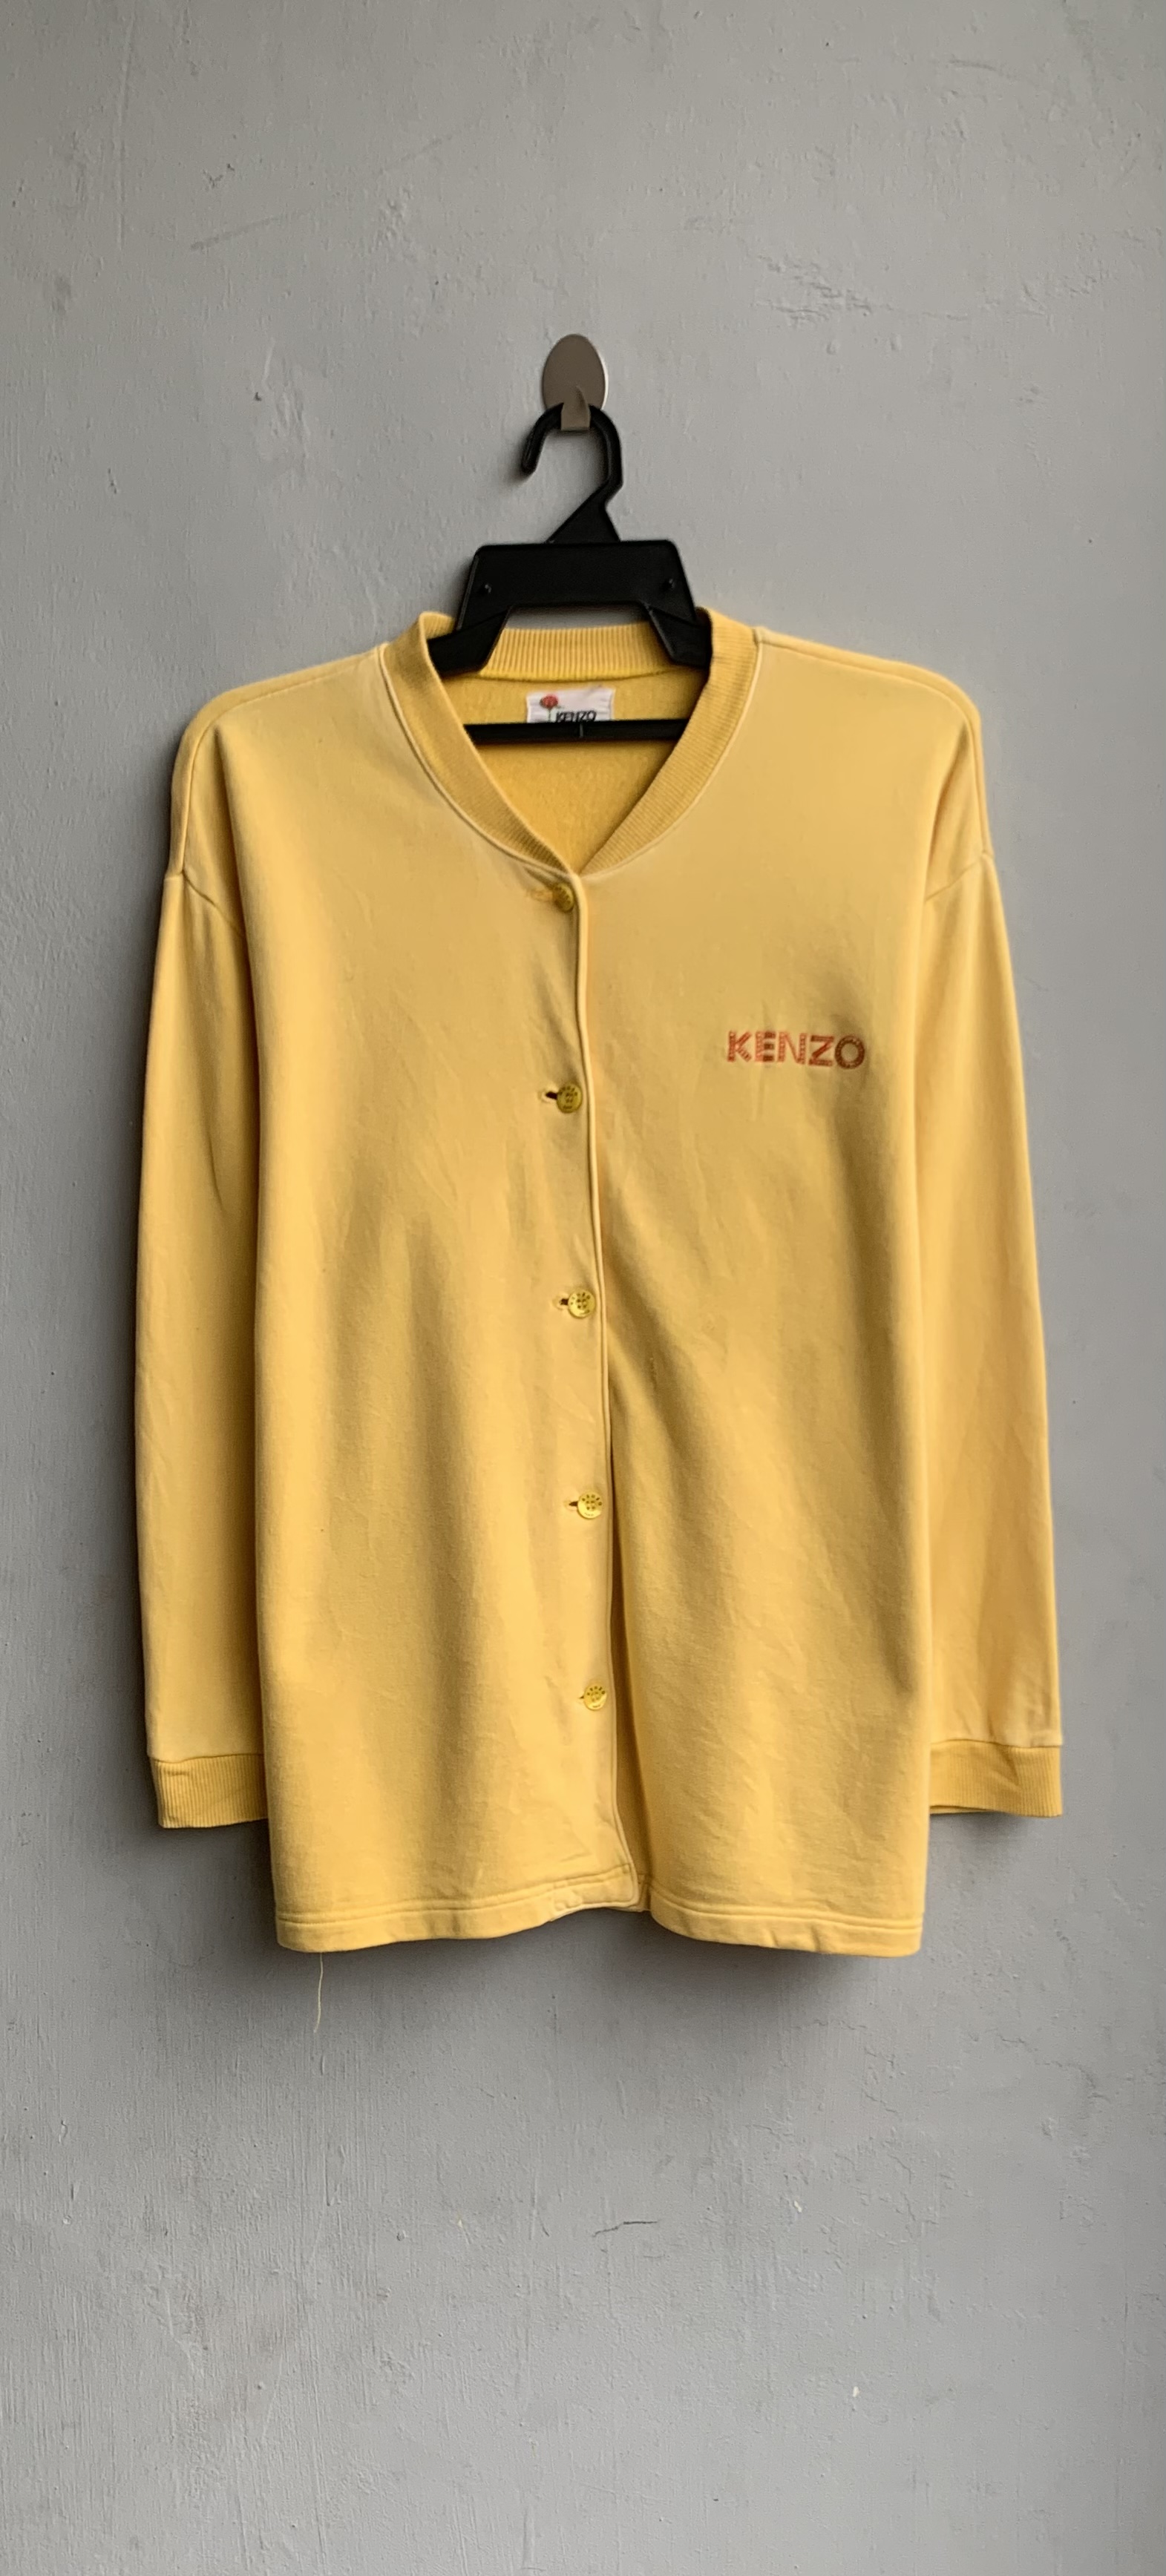 Vintage kenzo Button Up Sweatshirt - 1